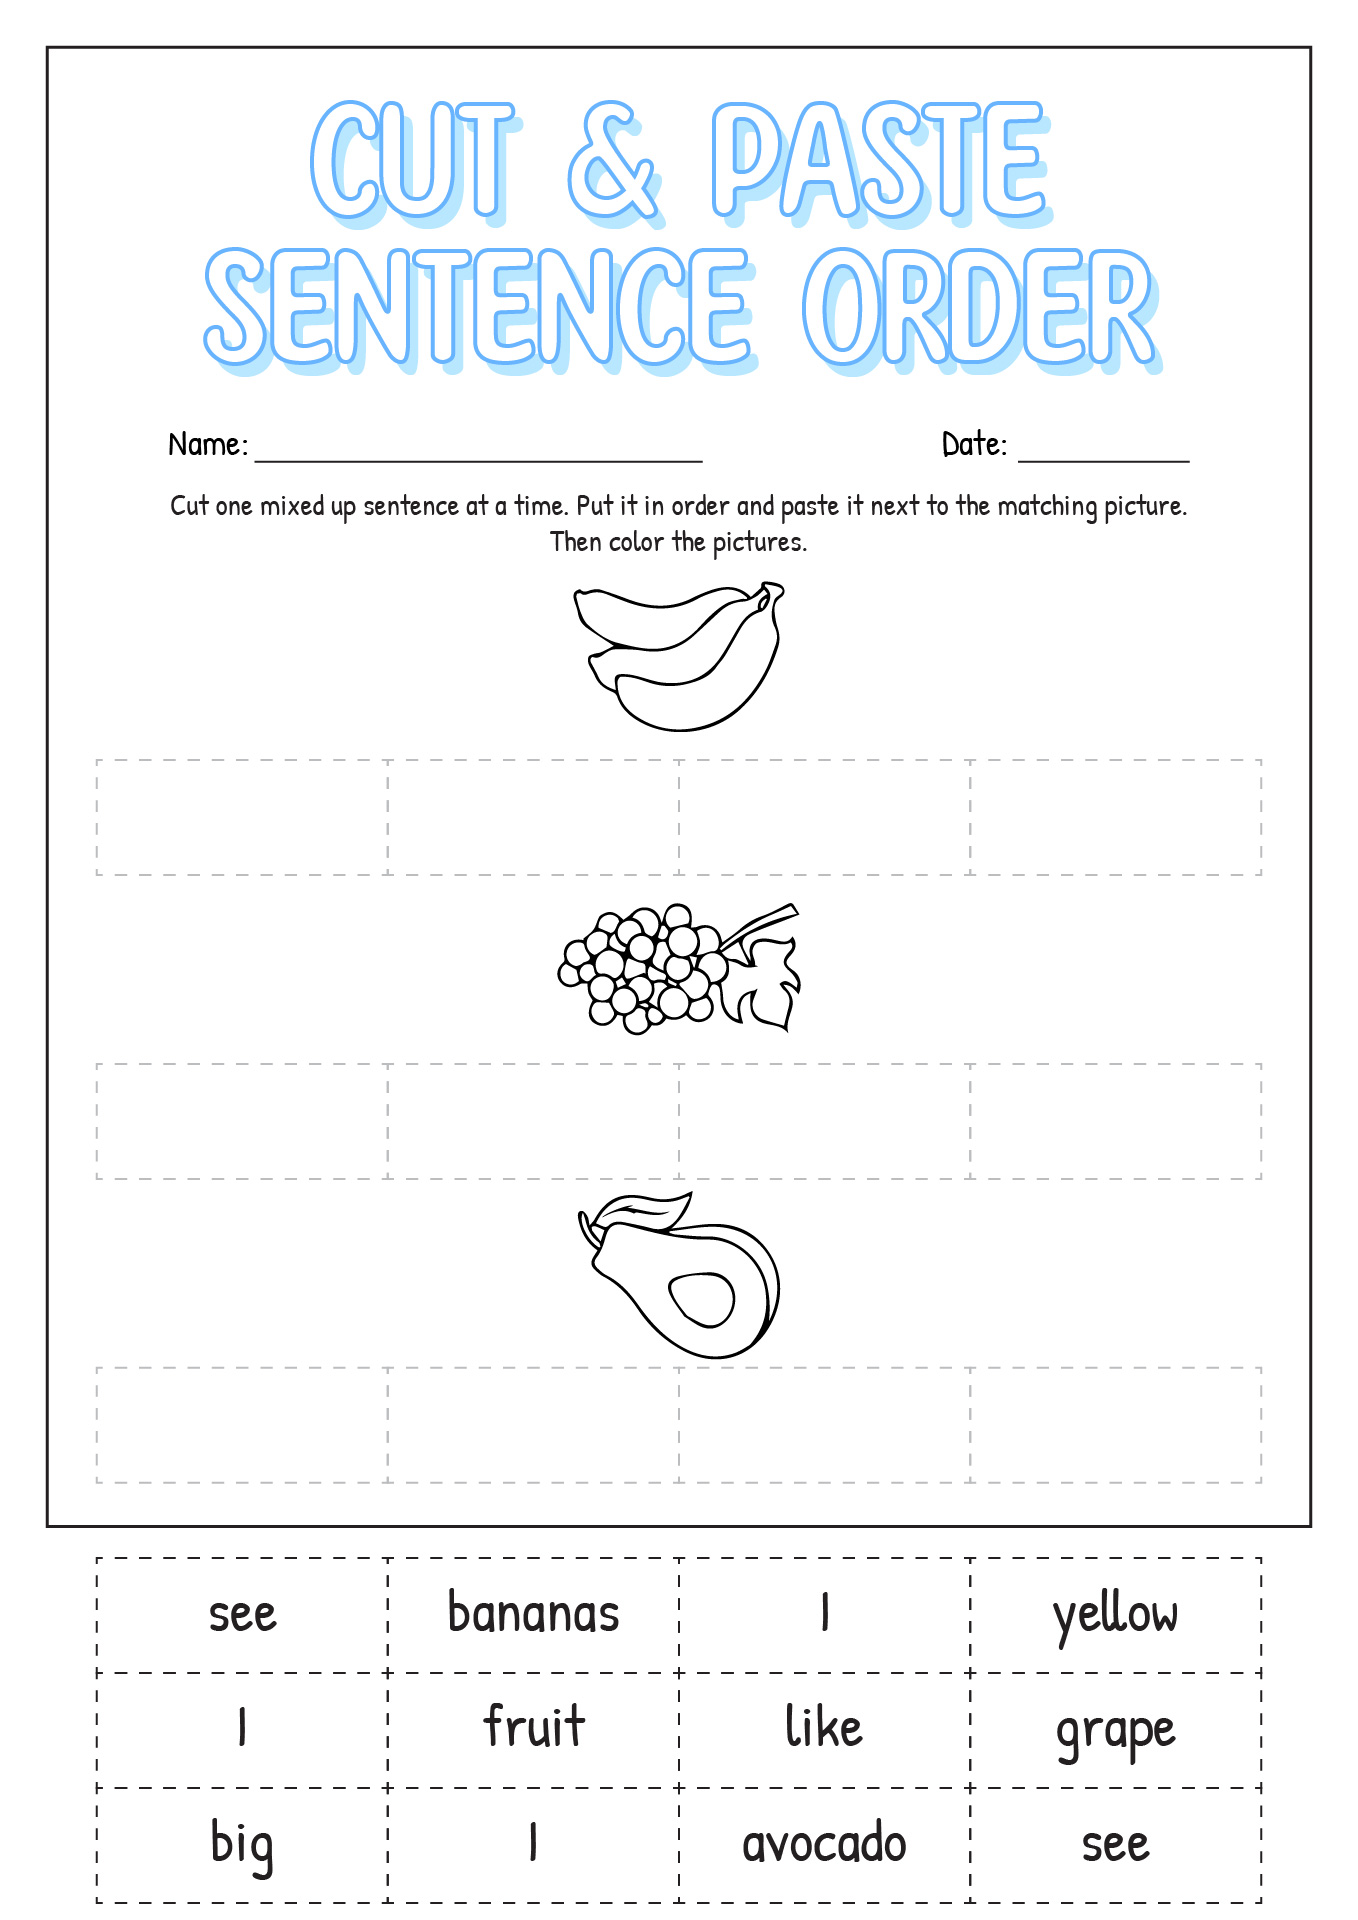 Cut and Paste Sentence Order Worksheet Image